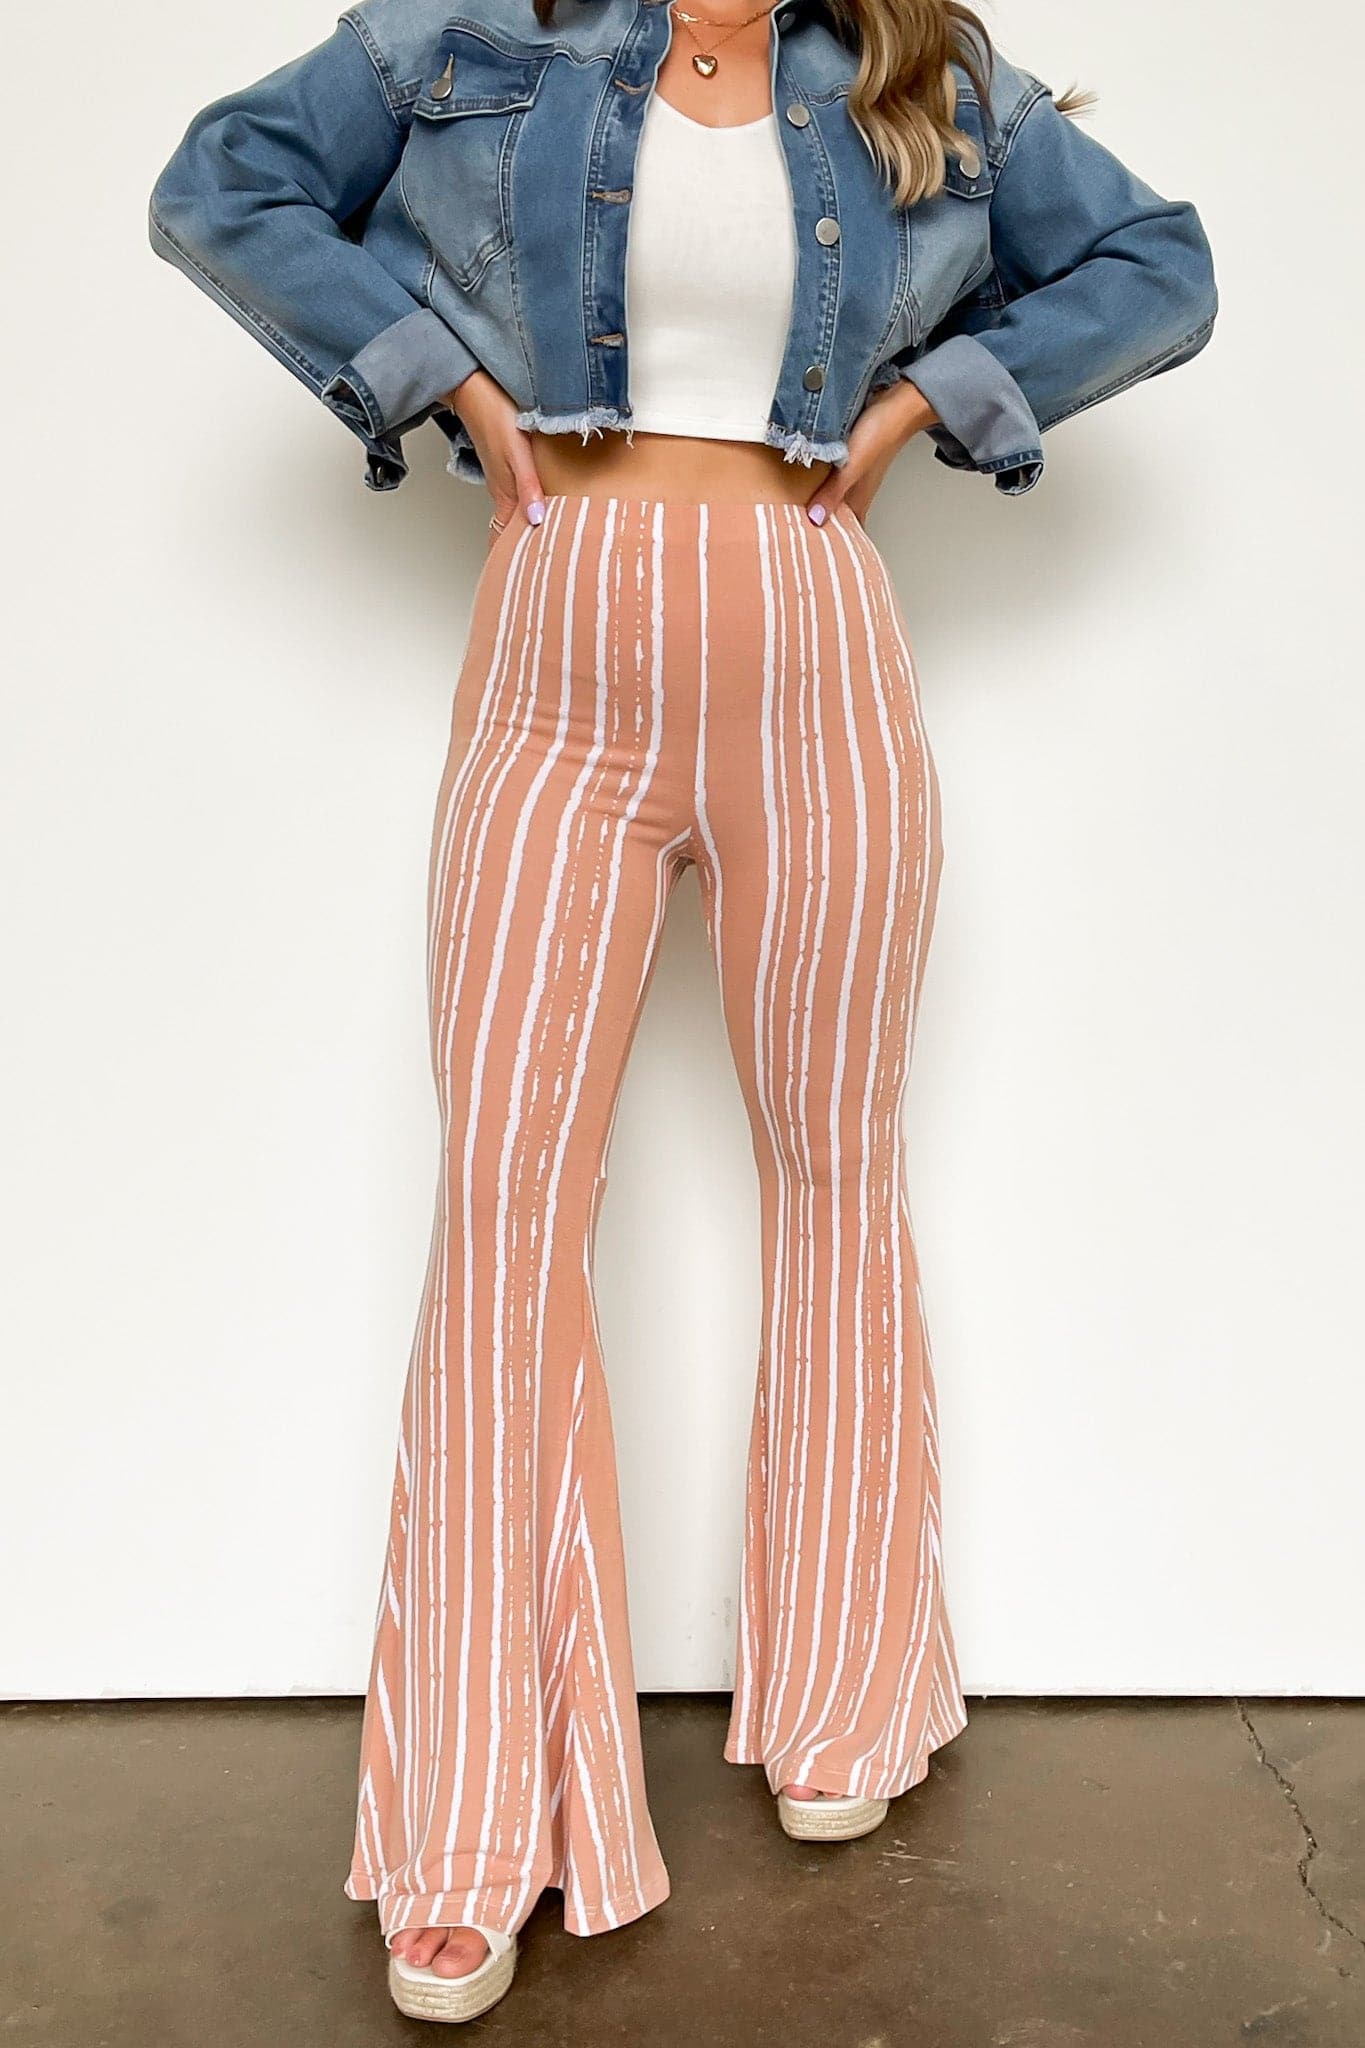  Darling Daze Striped Flare Pants - kitchencabinetmagic